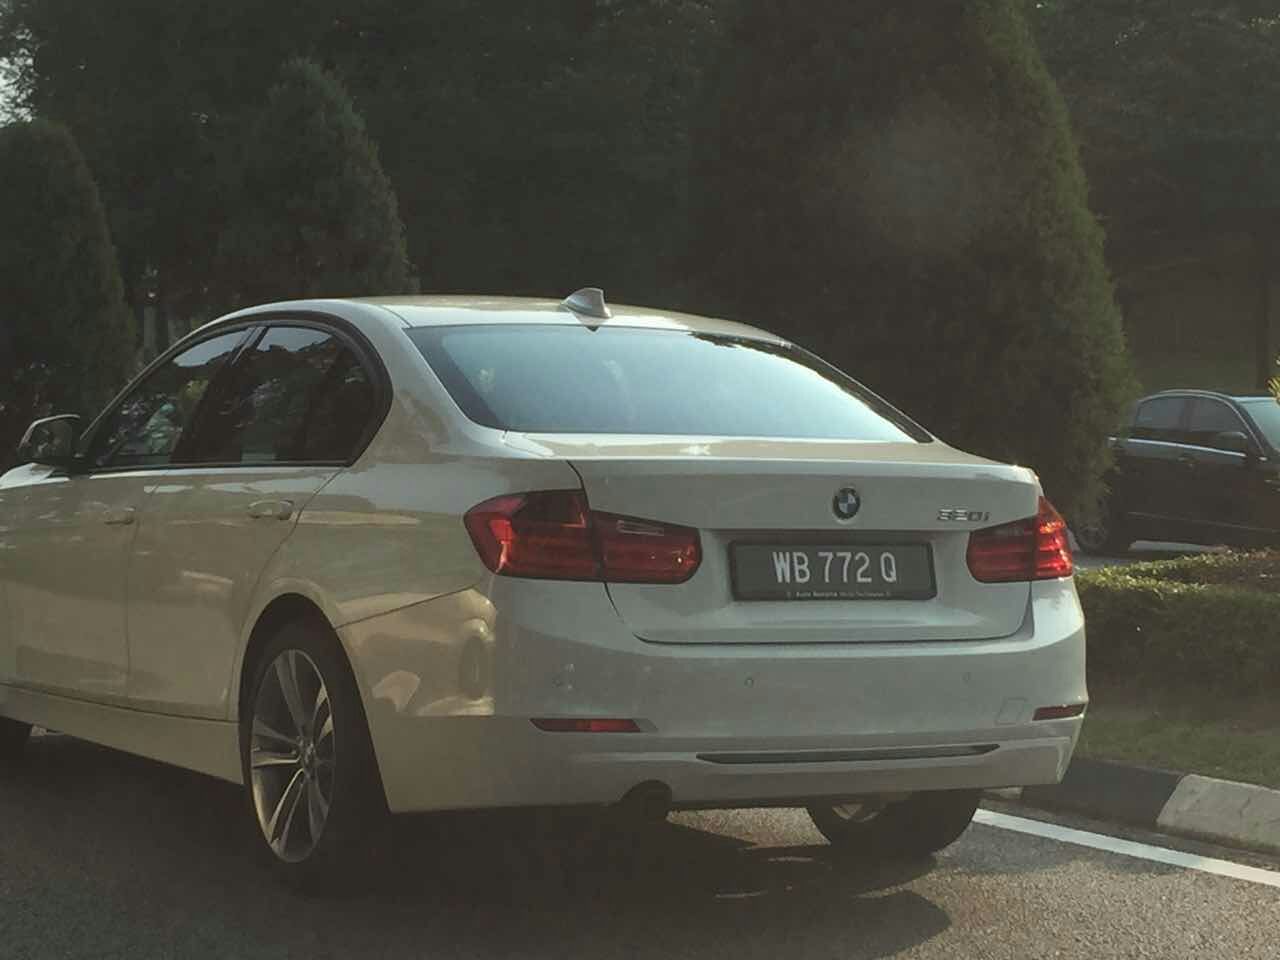 MalaysiaNumber - Malaysia Car Number Plate